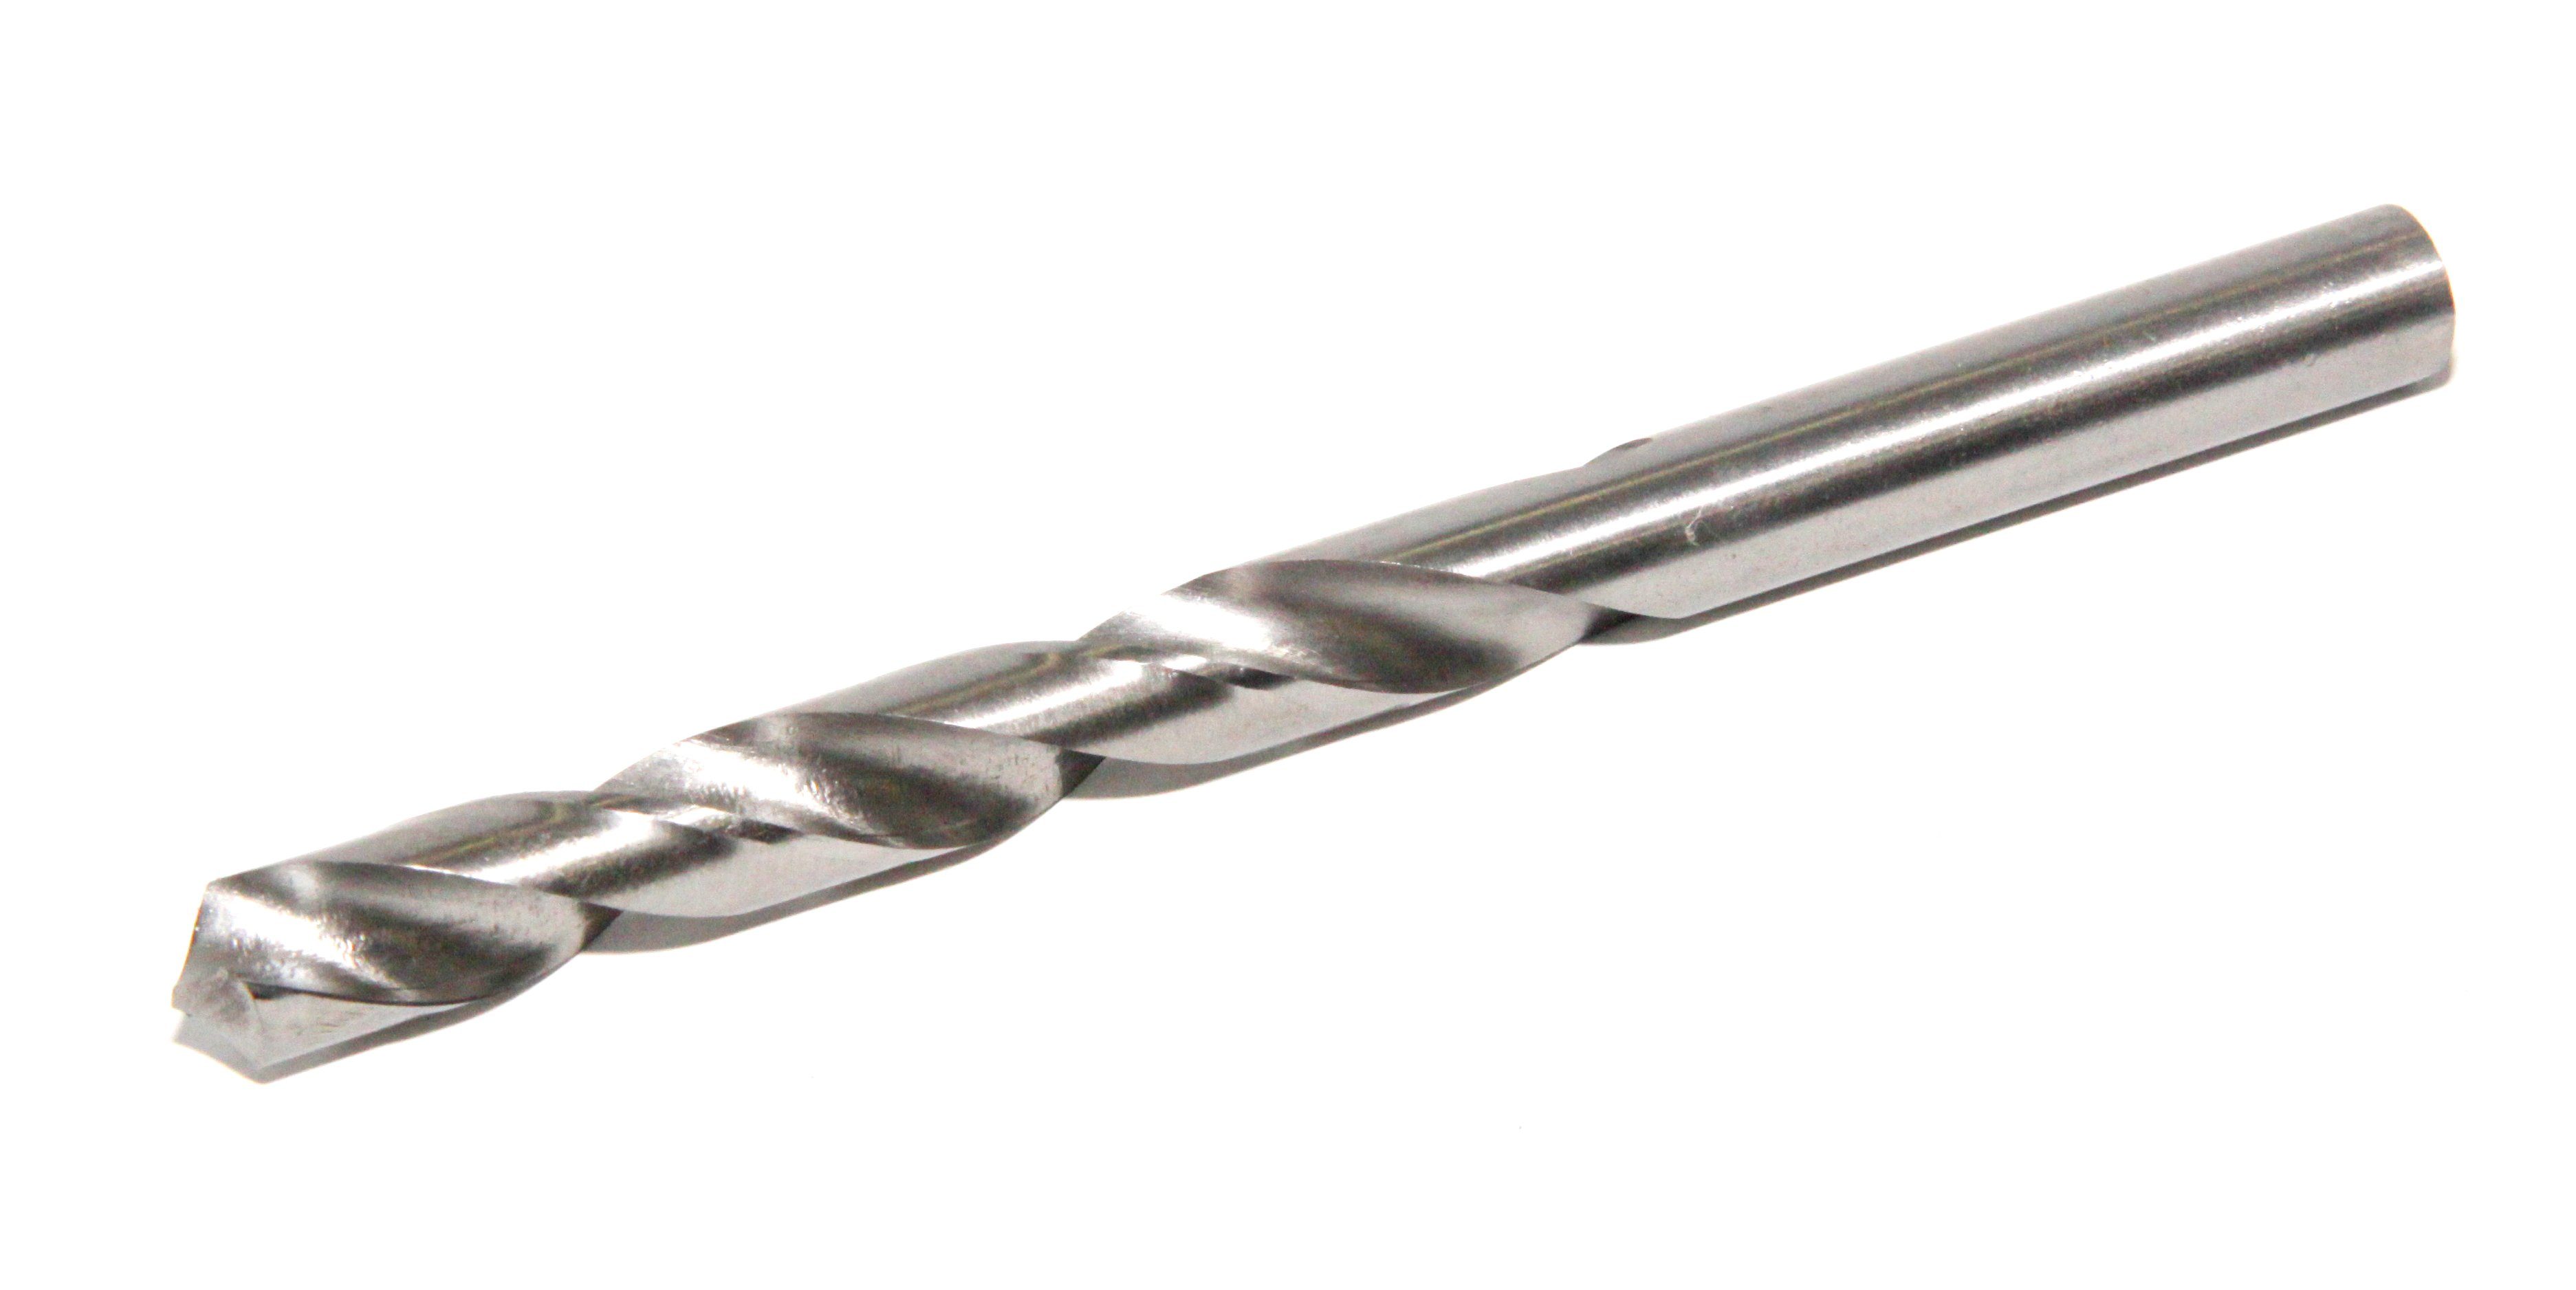 10mm, - HSS-R (EG Metallbohrer Bohrer HSS-R Qualität, edge 170 (EG) ground) Kanten Stahlbohrer Spiralbohrer Set 1 PeTools tlg. - (170-tlg), geschliffen Metallbohrer